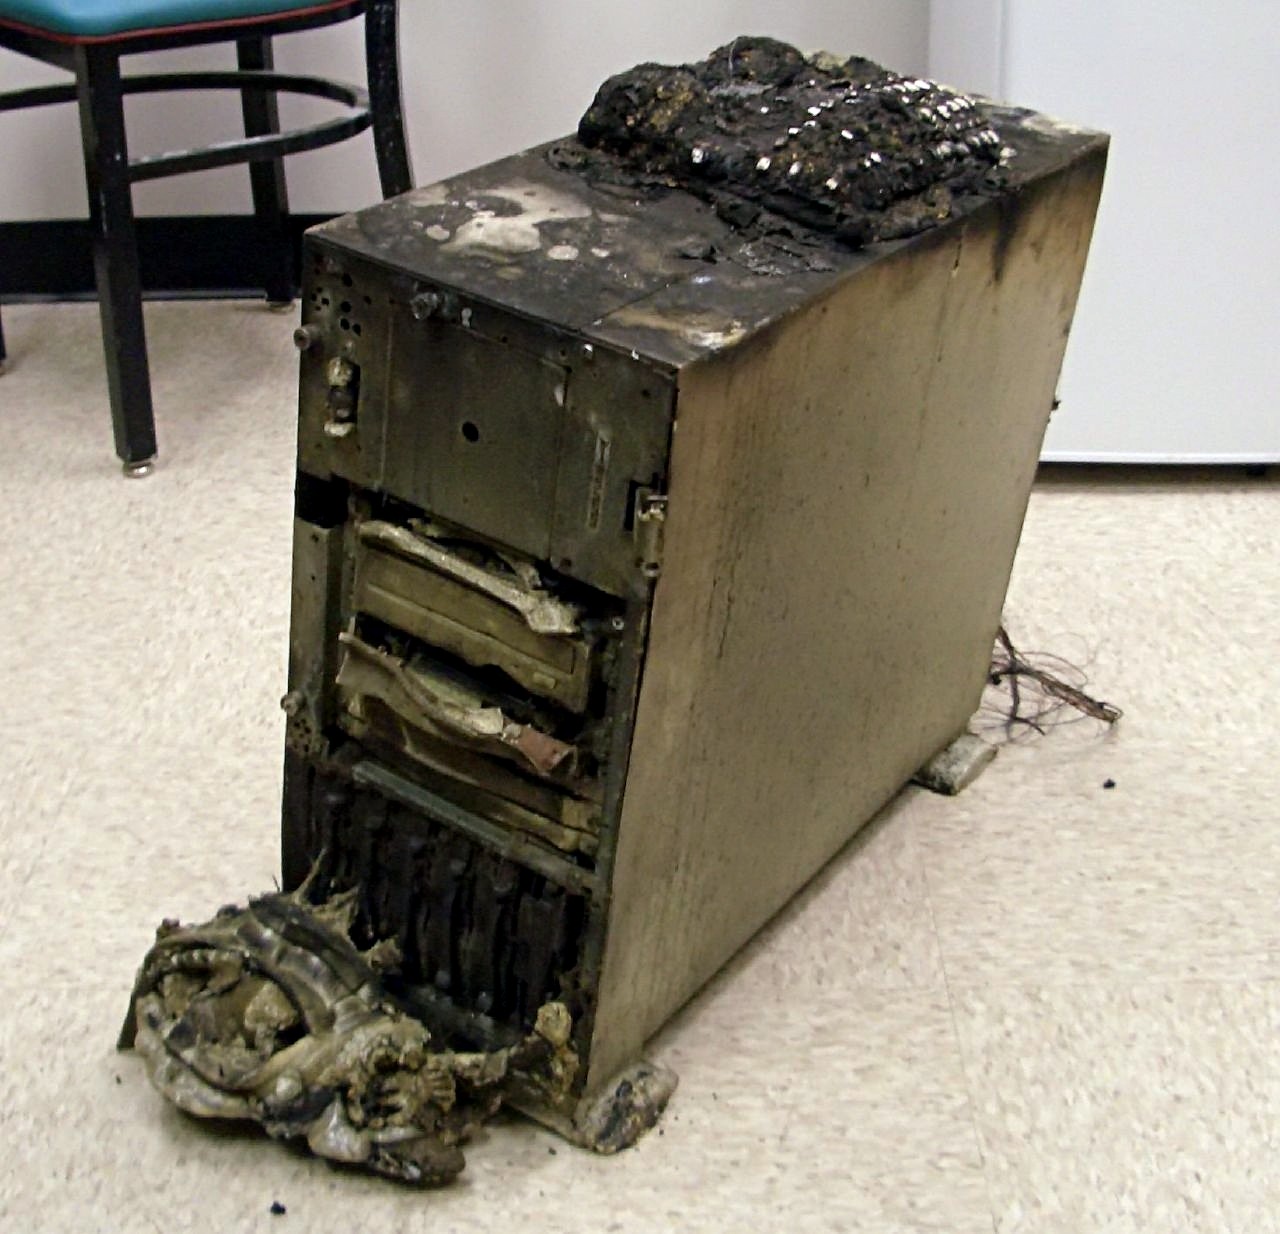 Server fire damage